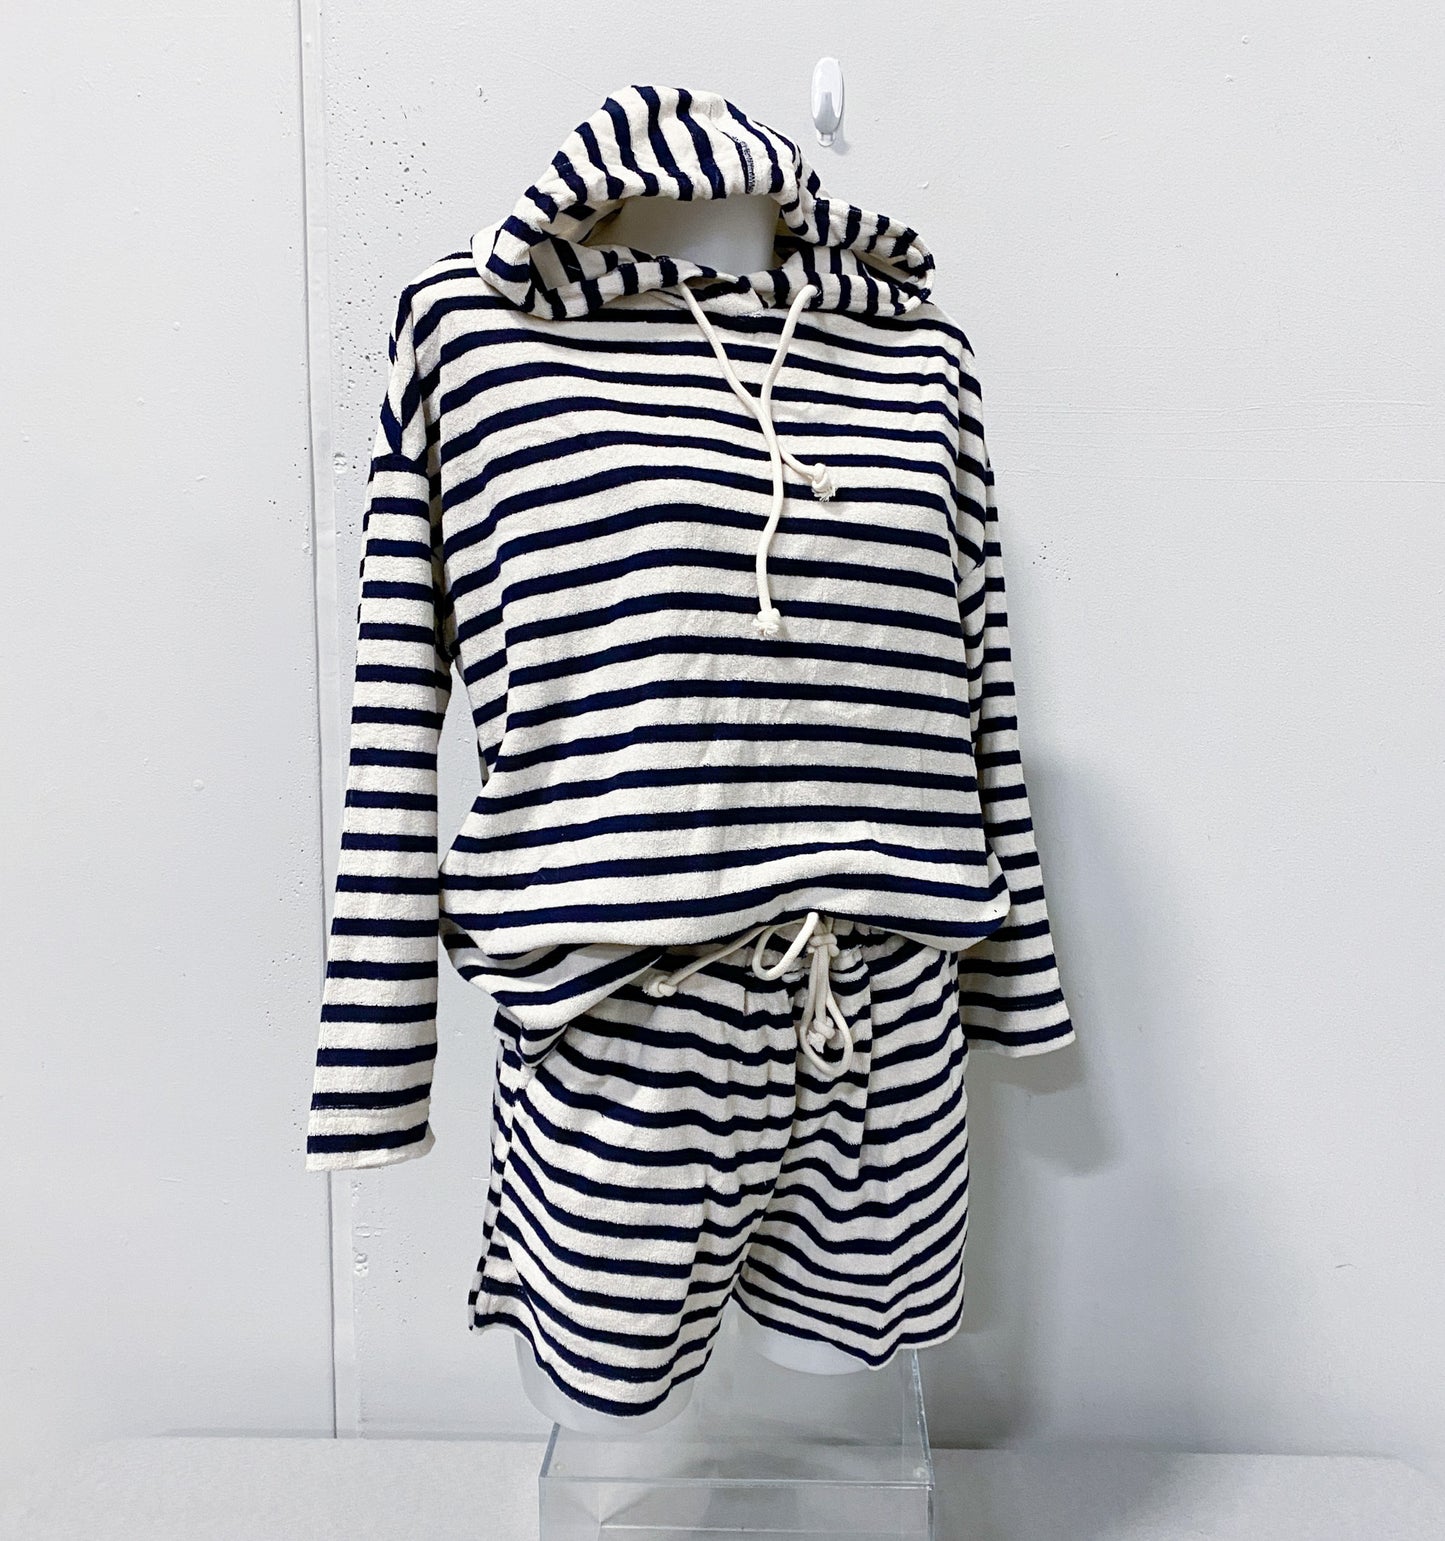 Women's Navy and Cream Stripped Pajama Set (Size Medium)